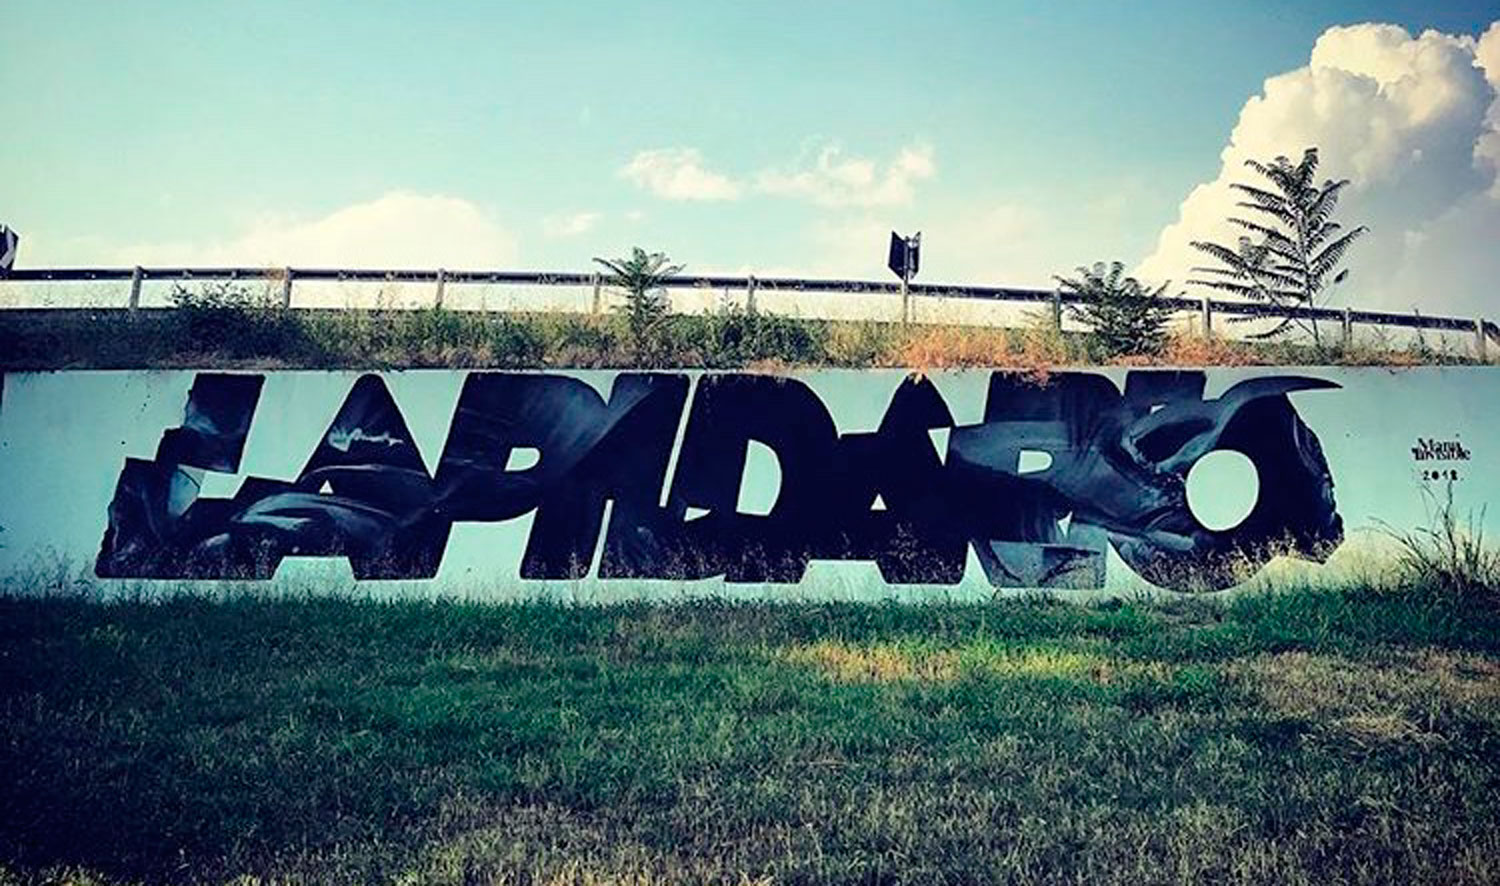 ''Lapidario'' Quartz and spray on wall 3 x 15 m Milano A7 turnpike 2018